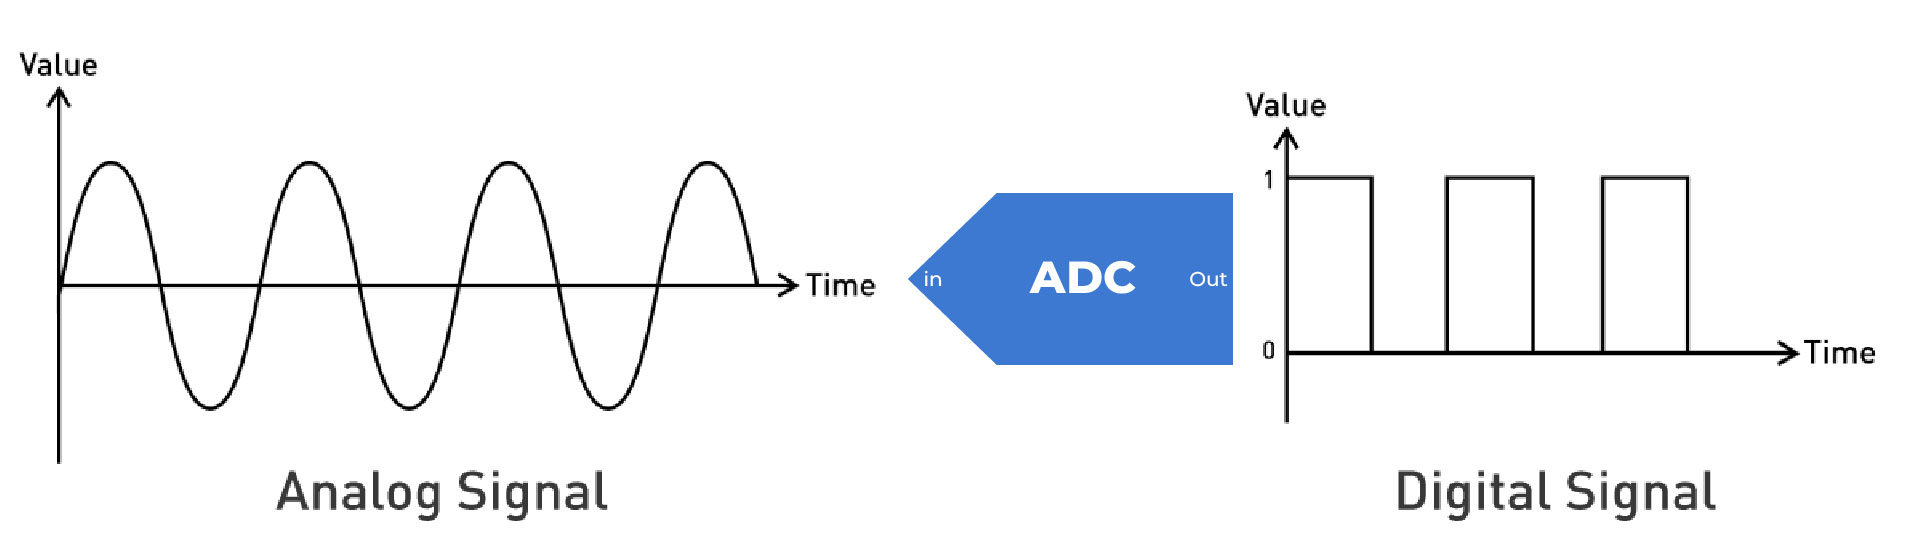 AD converter scheme - converts the analog signal into digital domain data